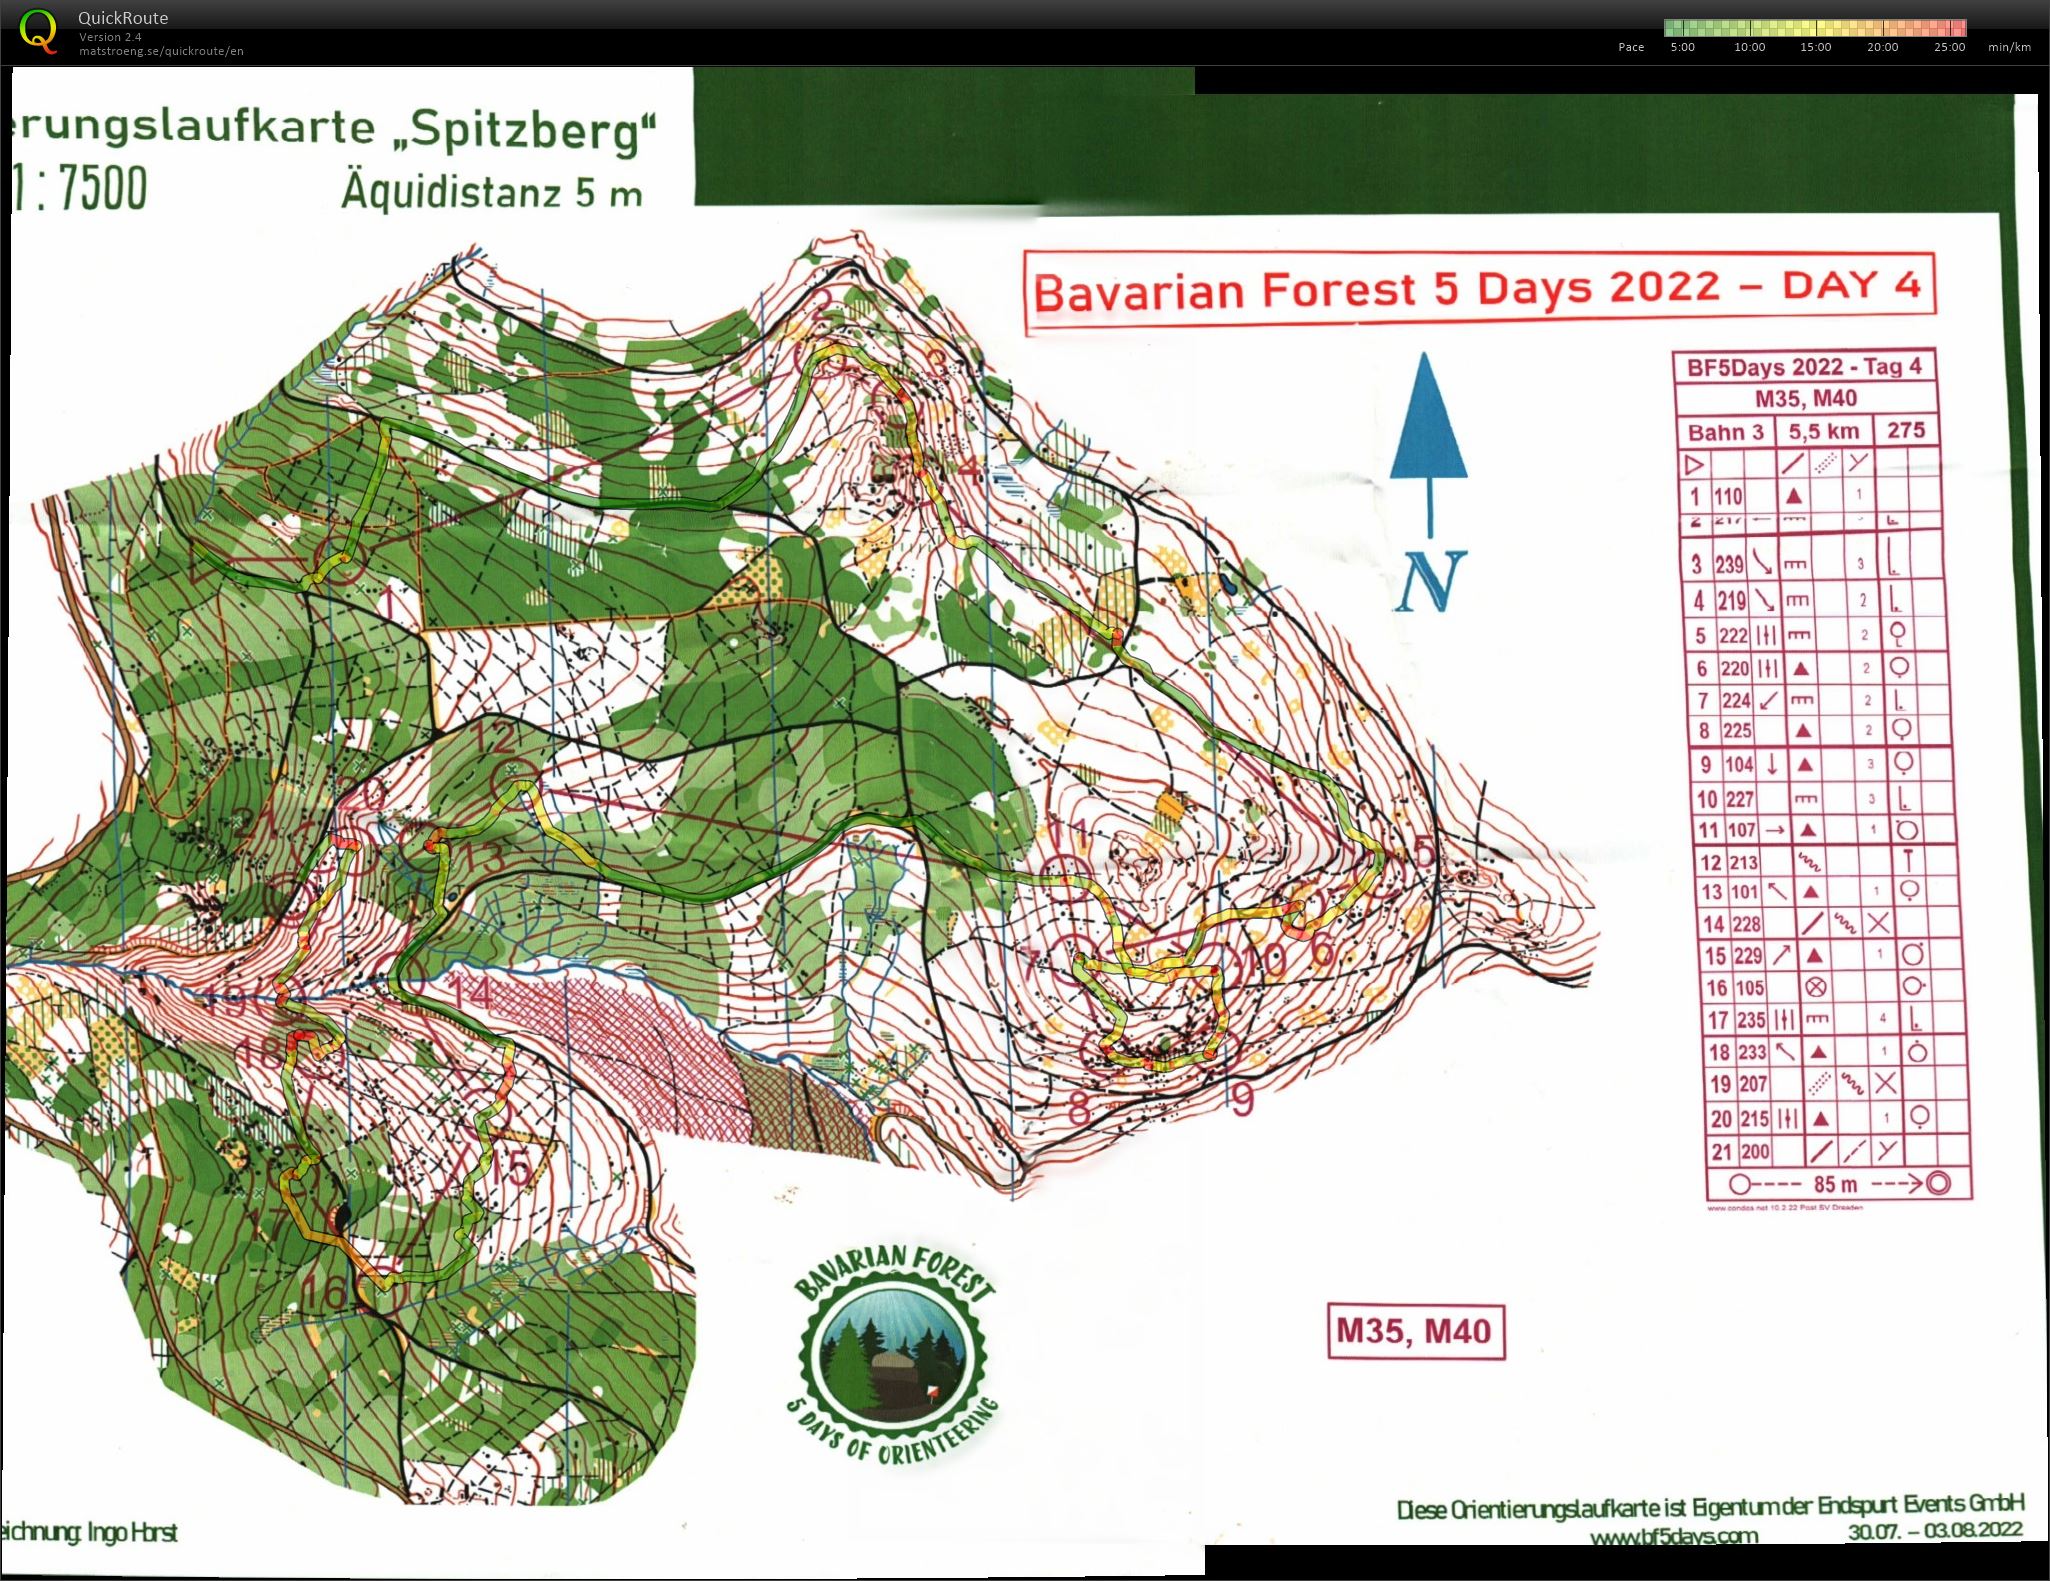 Bavarian Forest 5 Days - Day 4 (02-08-2022)